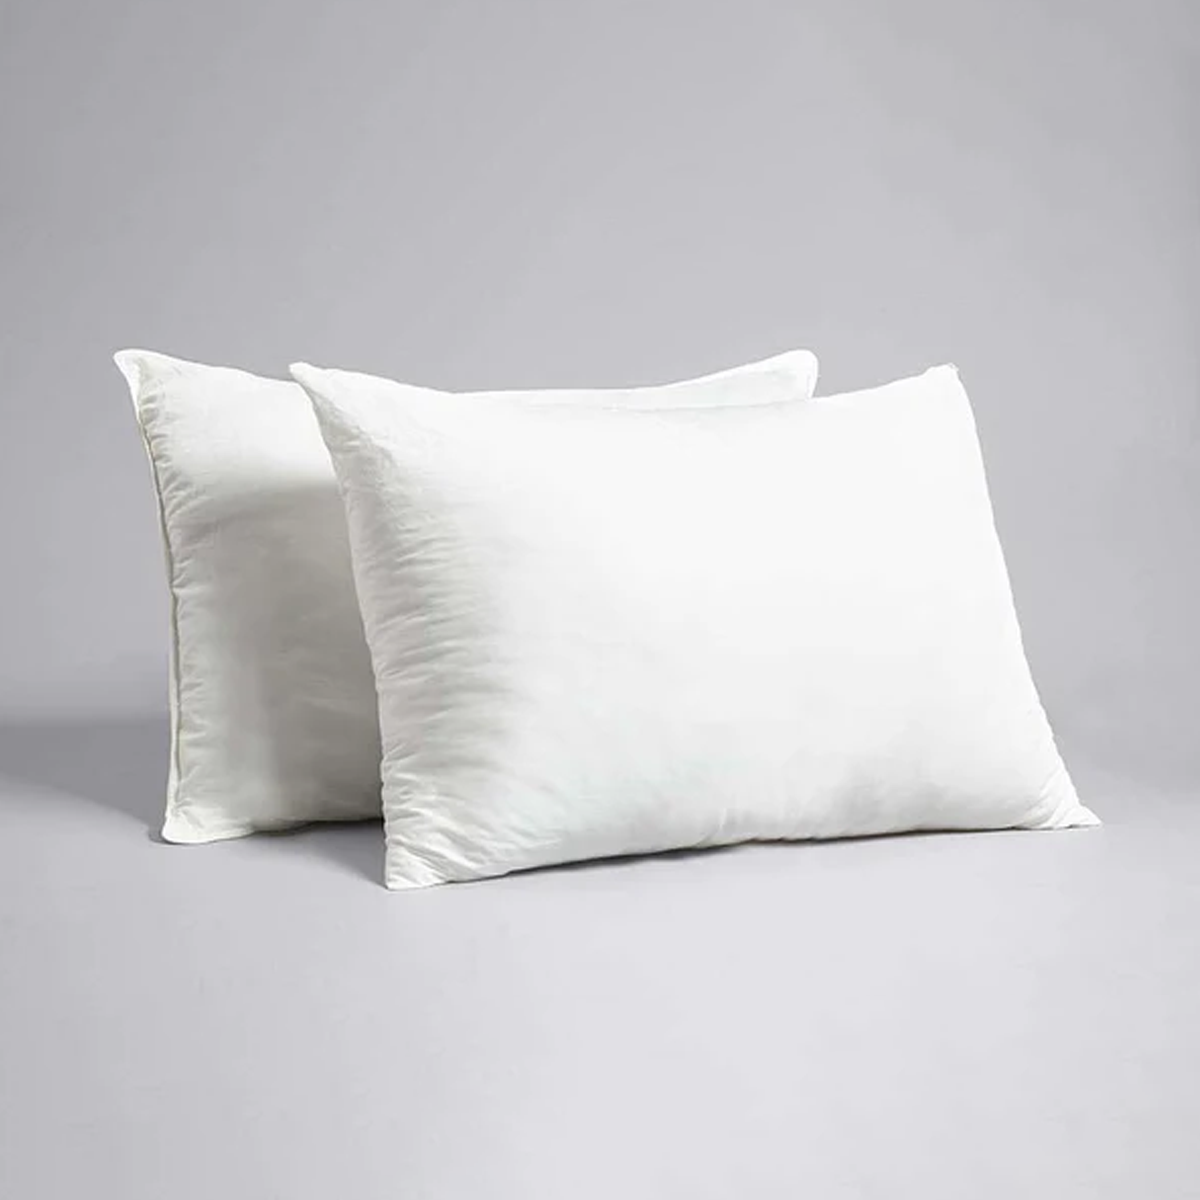 Pillow - Extrabounce - 740grm